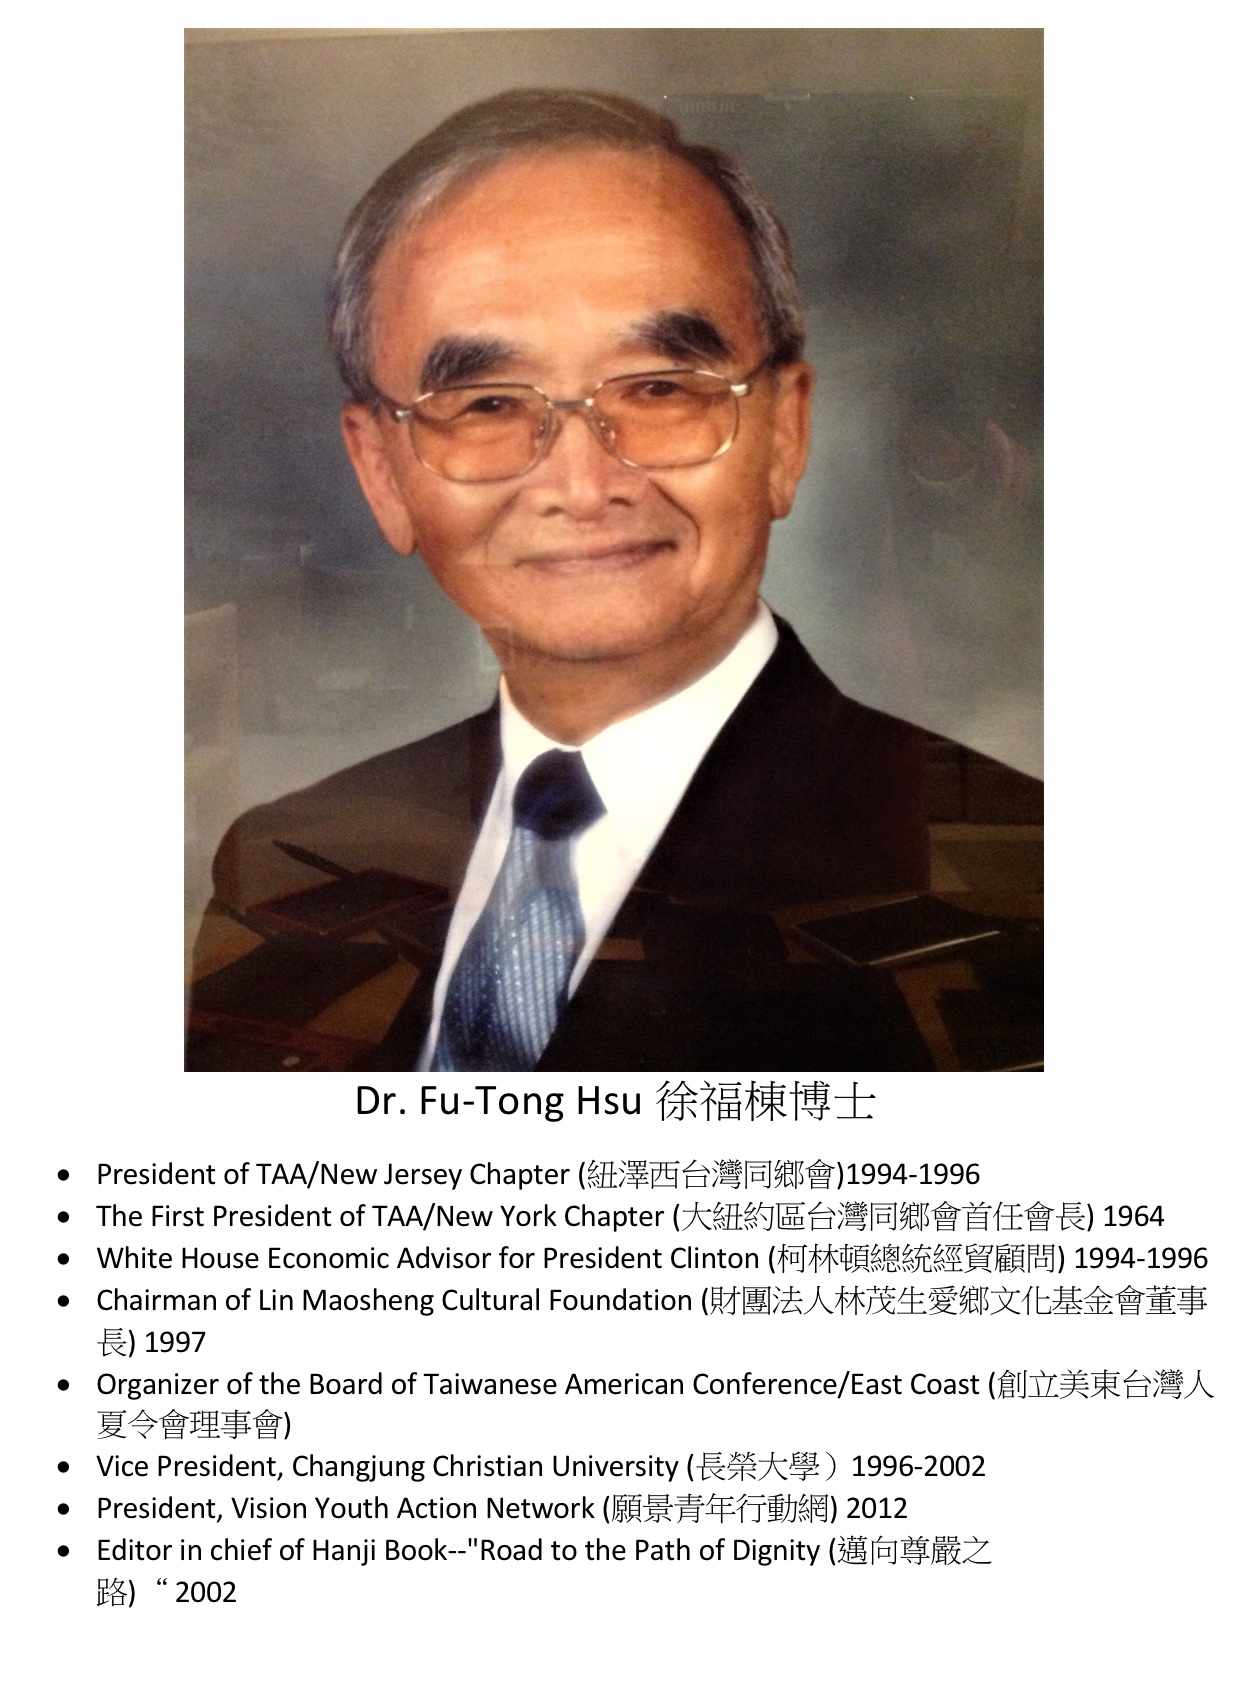 251. Dr. Fu-Tong Hsu 徐福棟博士